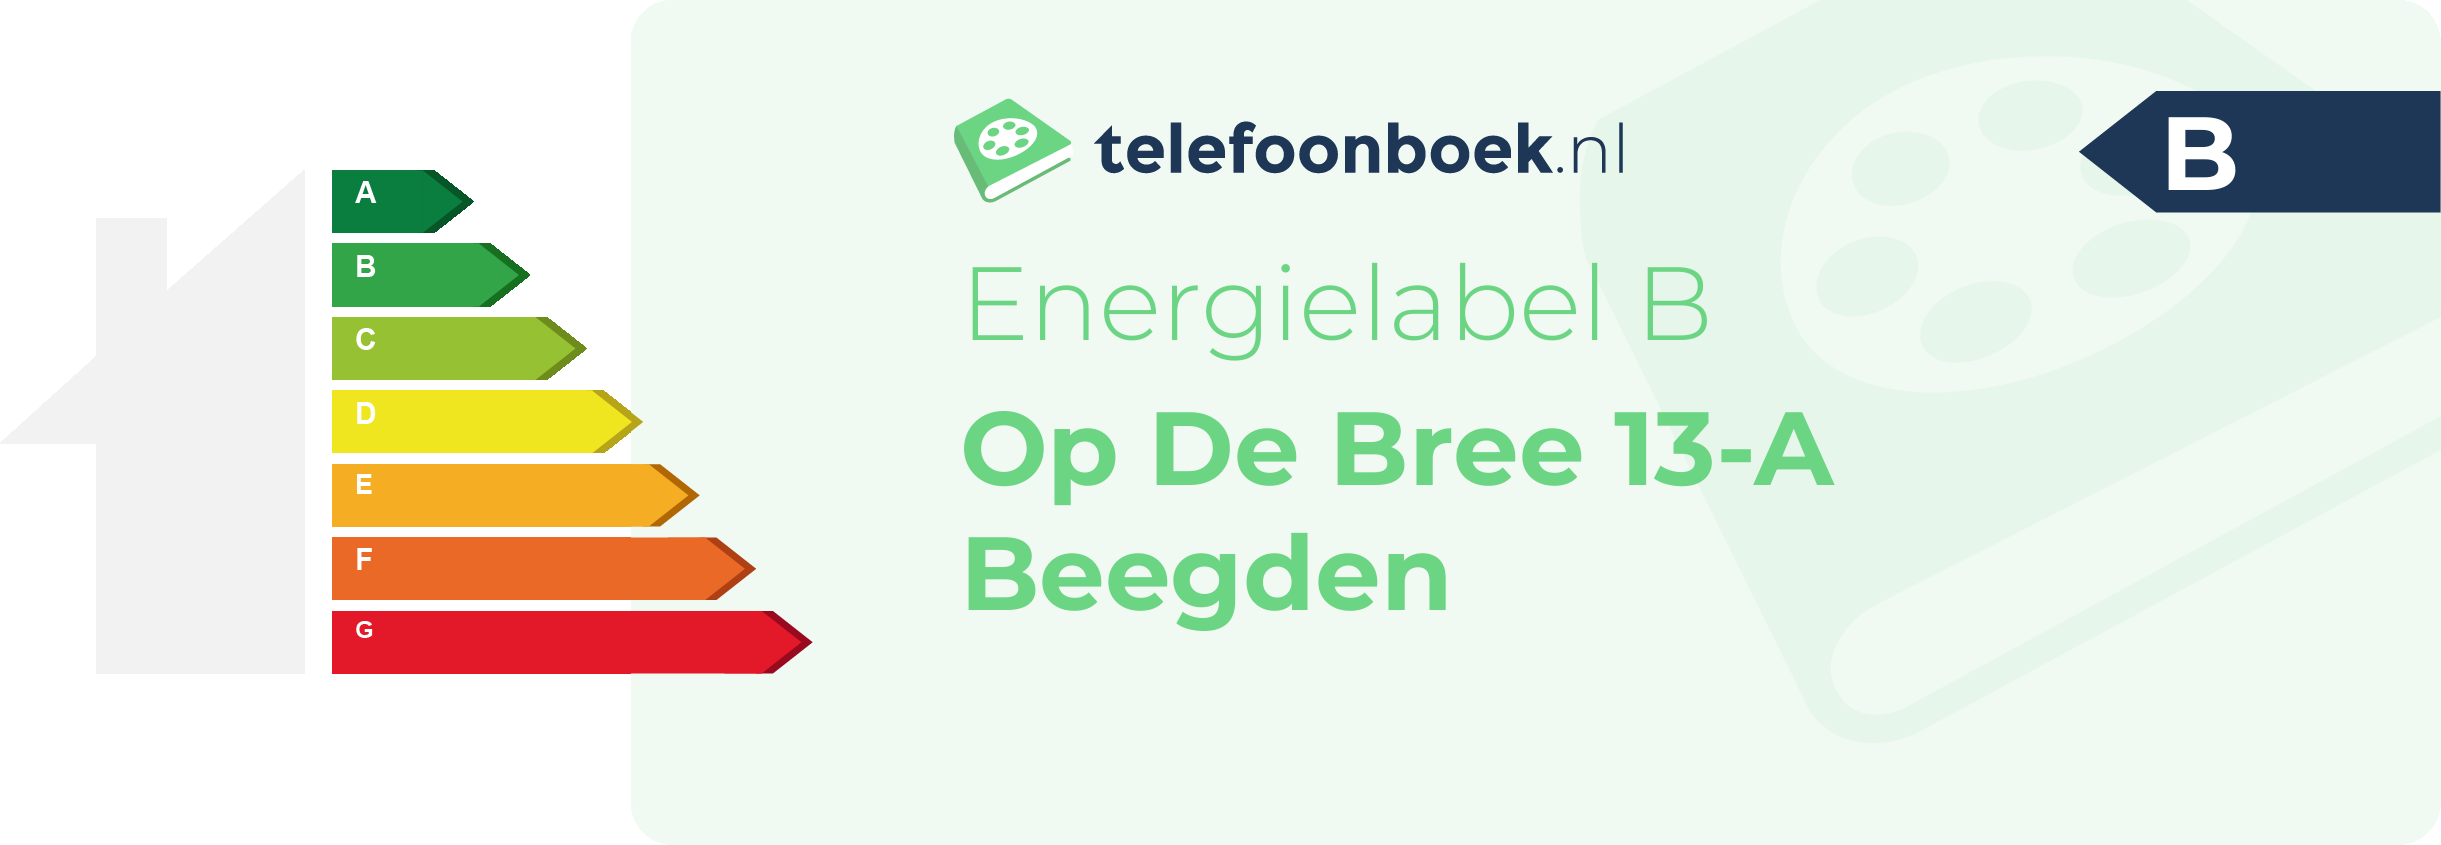 Energielabel Op De Bree 13-A Beegden